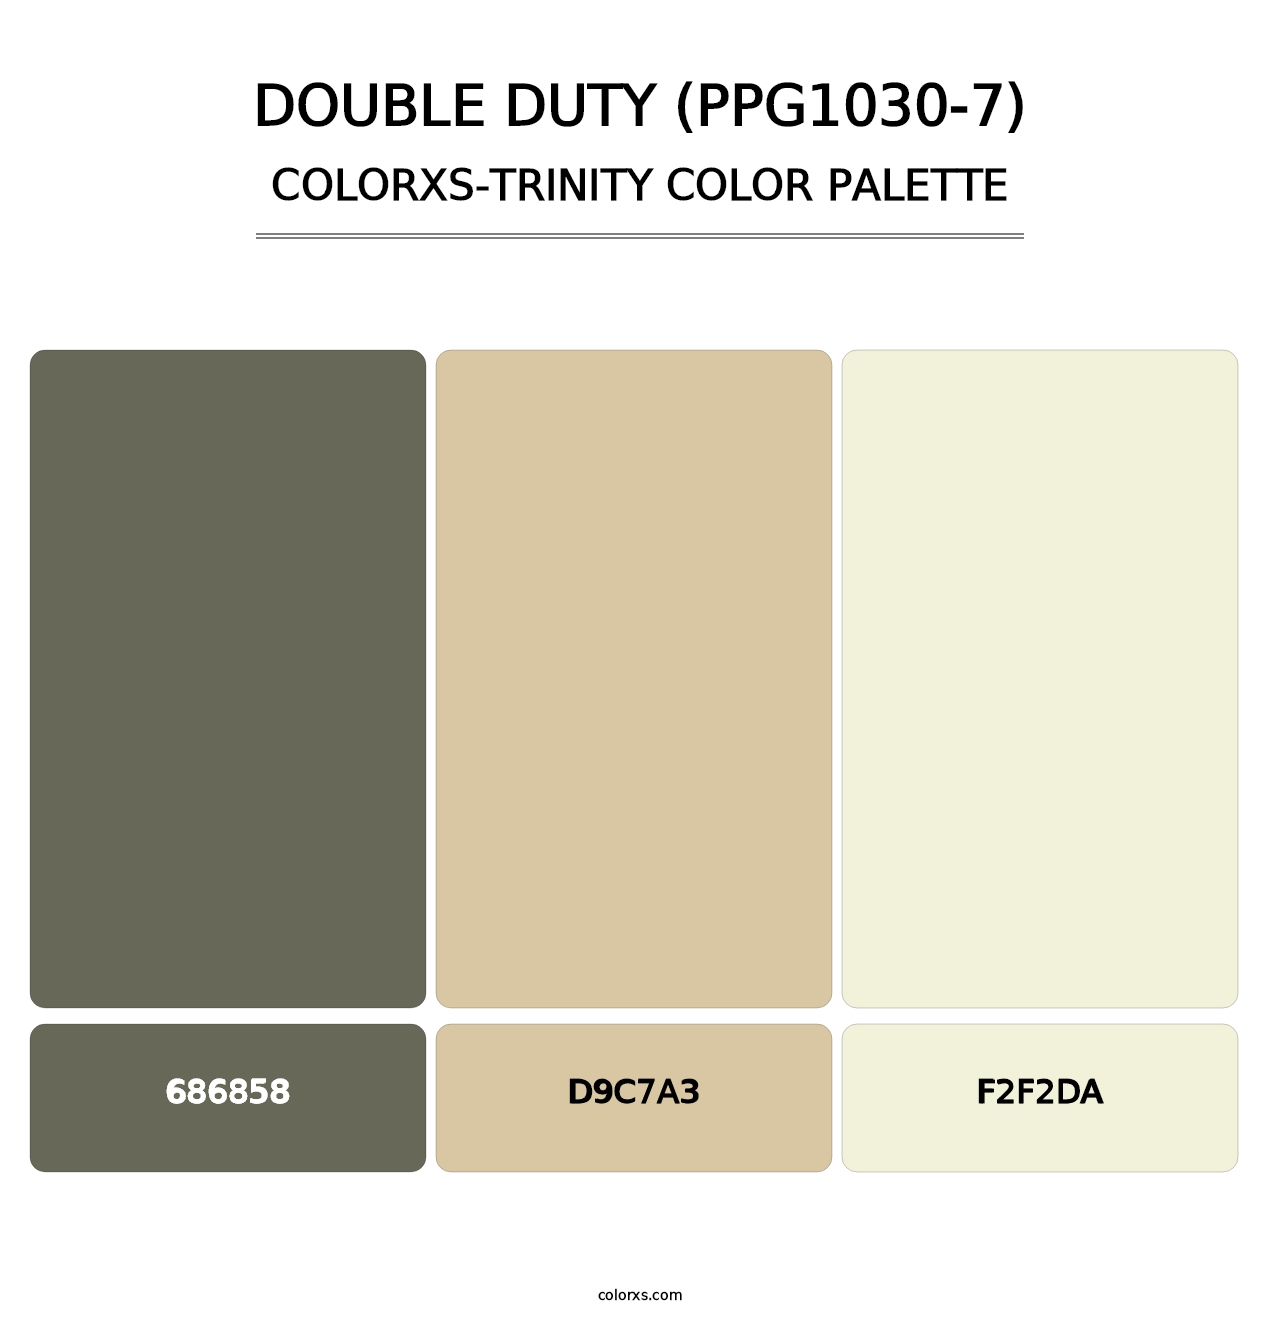 Double Duty (PPG1030-7) - Colorxs Trinity Palette